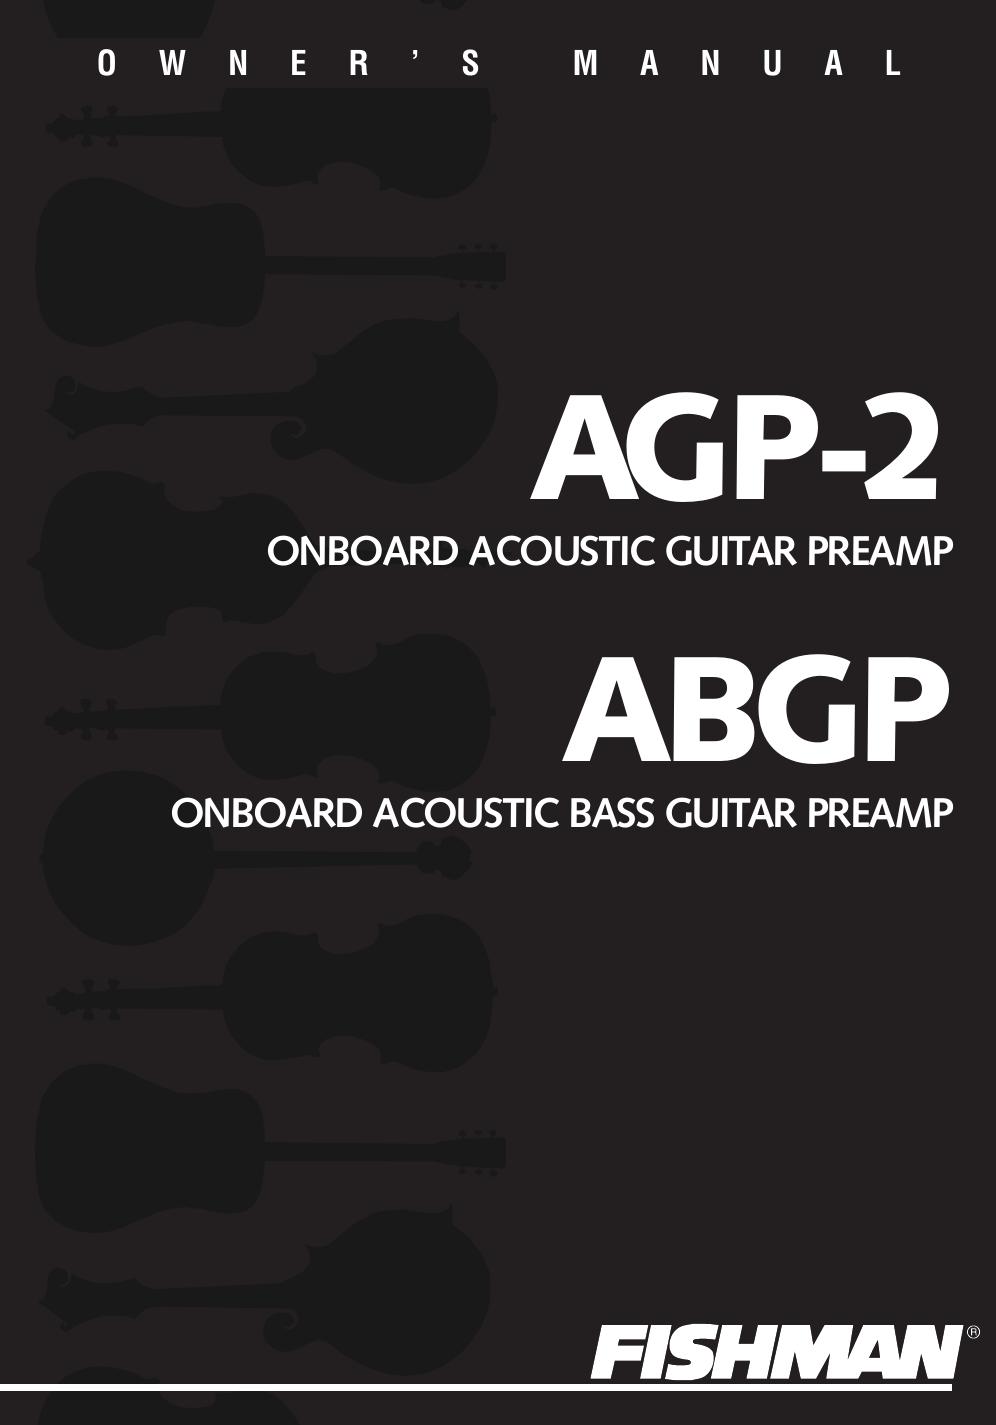 Fishman ABGP Musical Instrument Amplifier User Manual